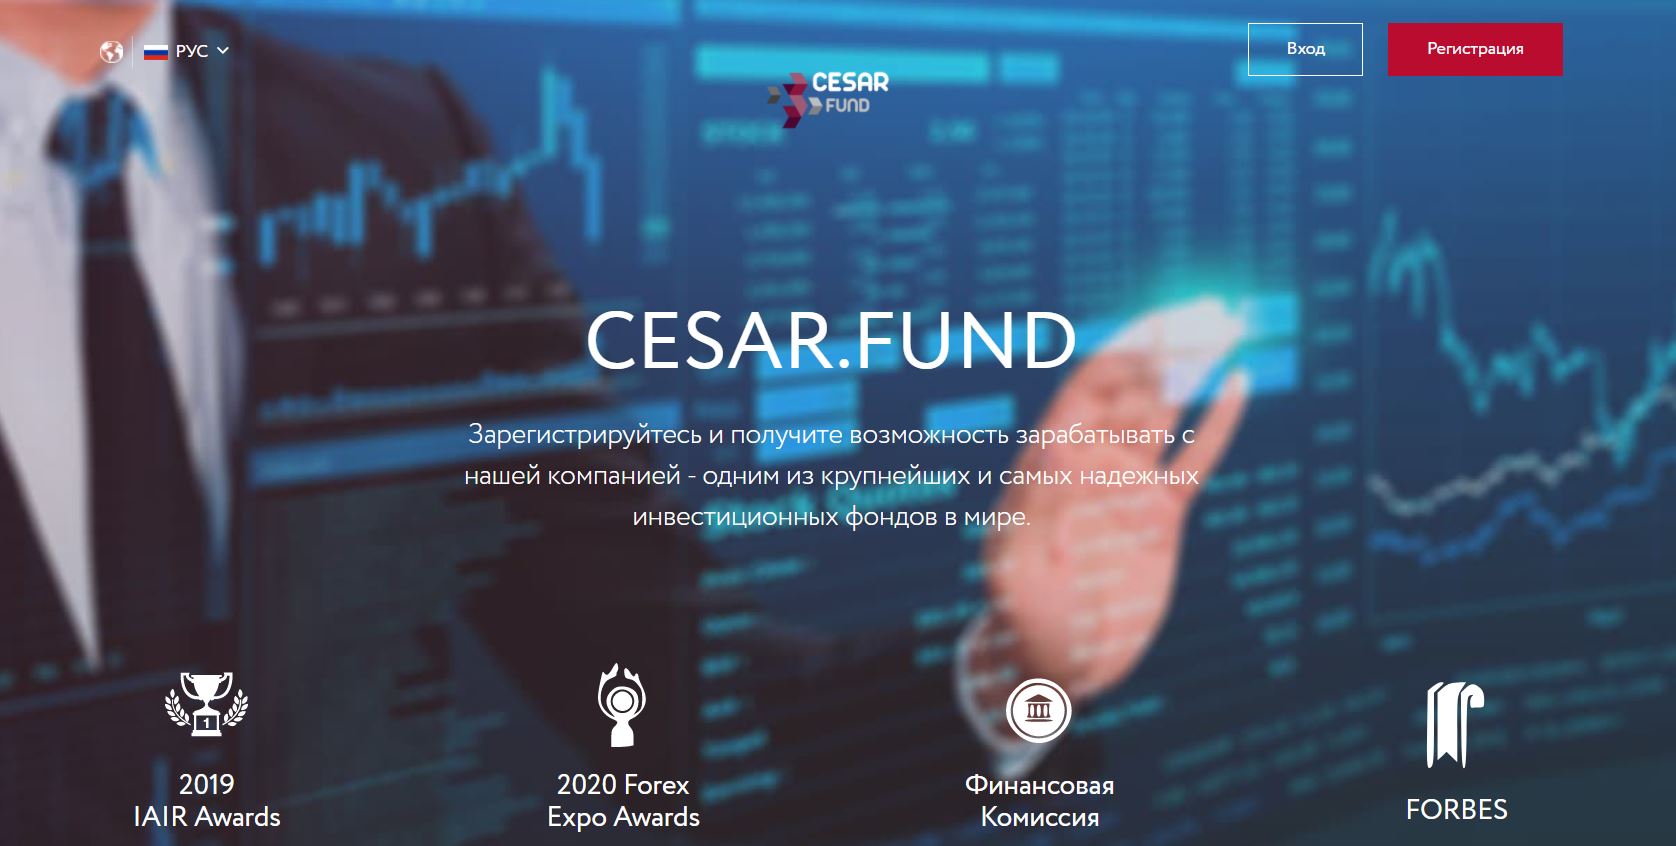 Cesar Fund 